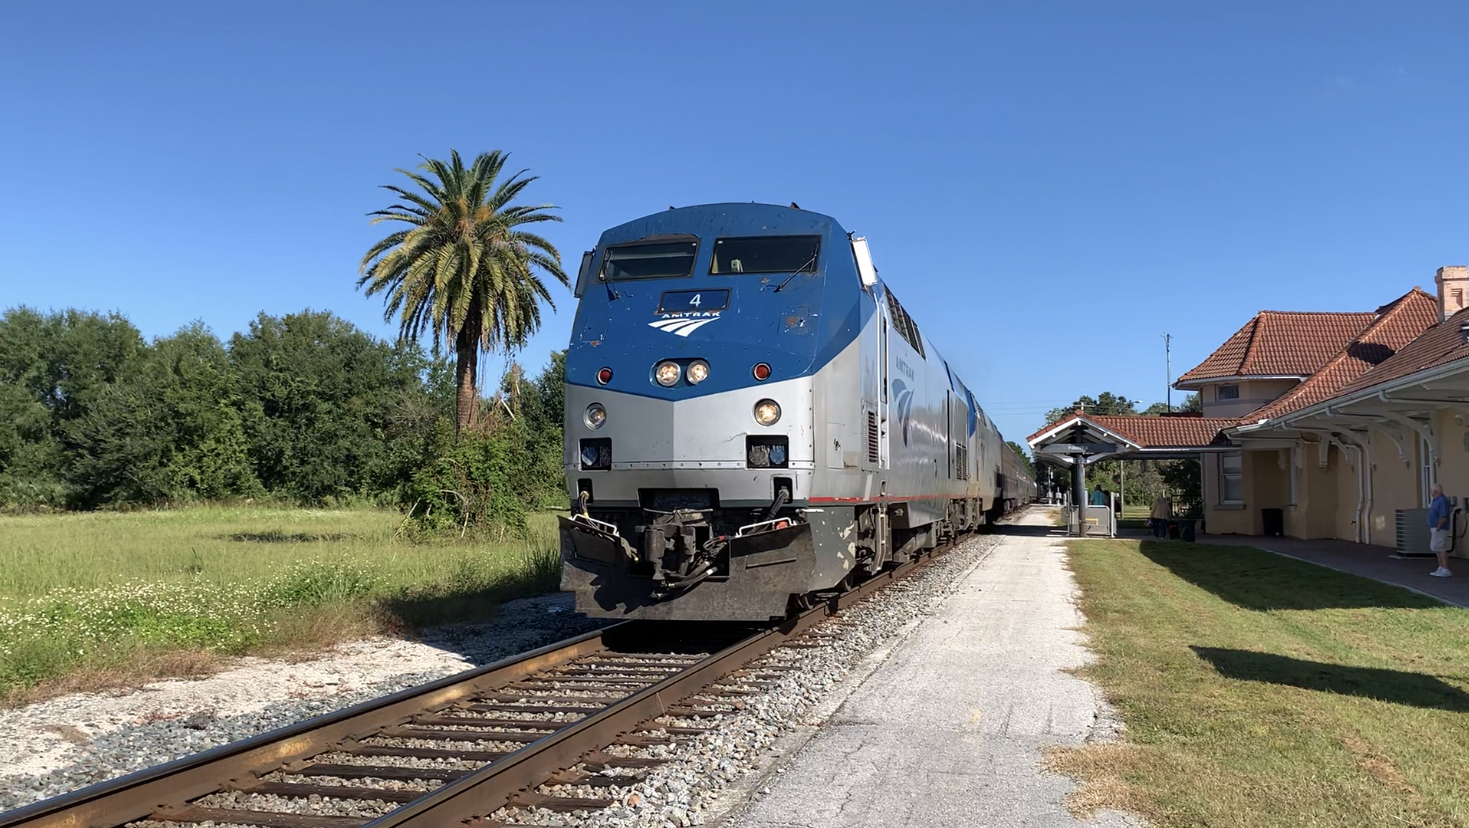 Silver Meteor train in Florida